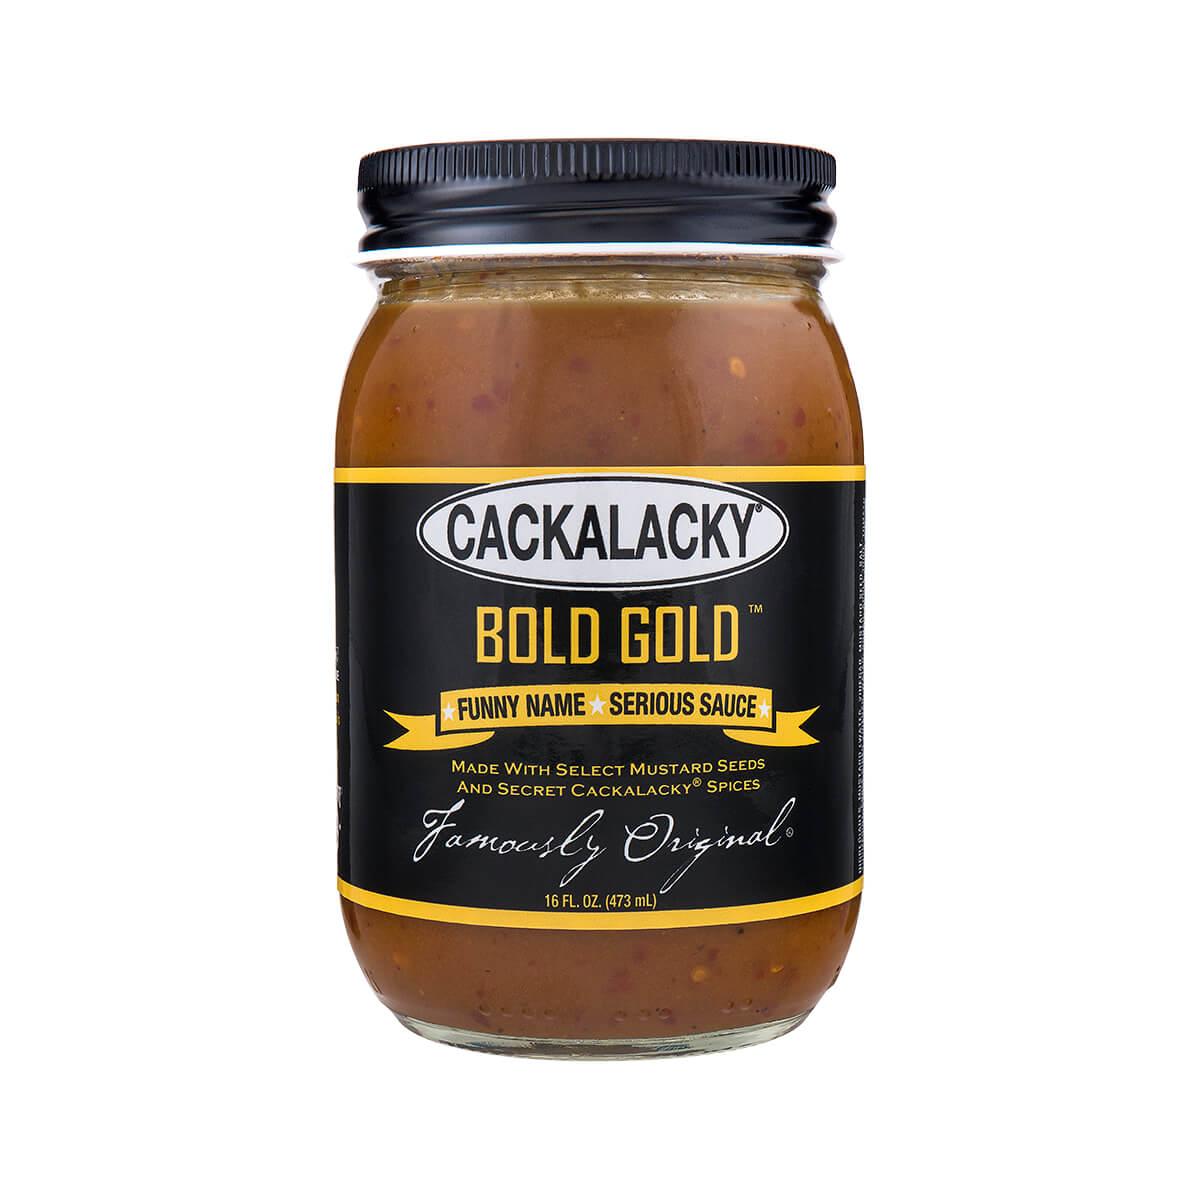  Cackalacky Bold Gold Sauce